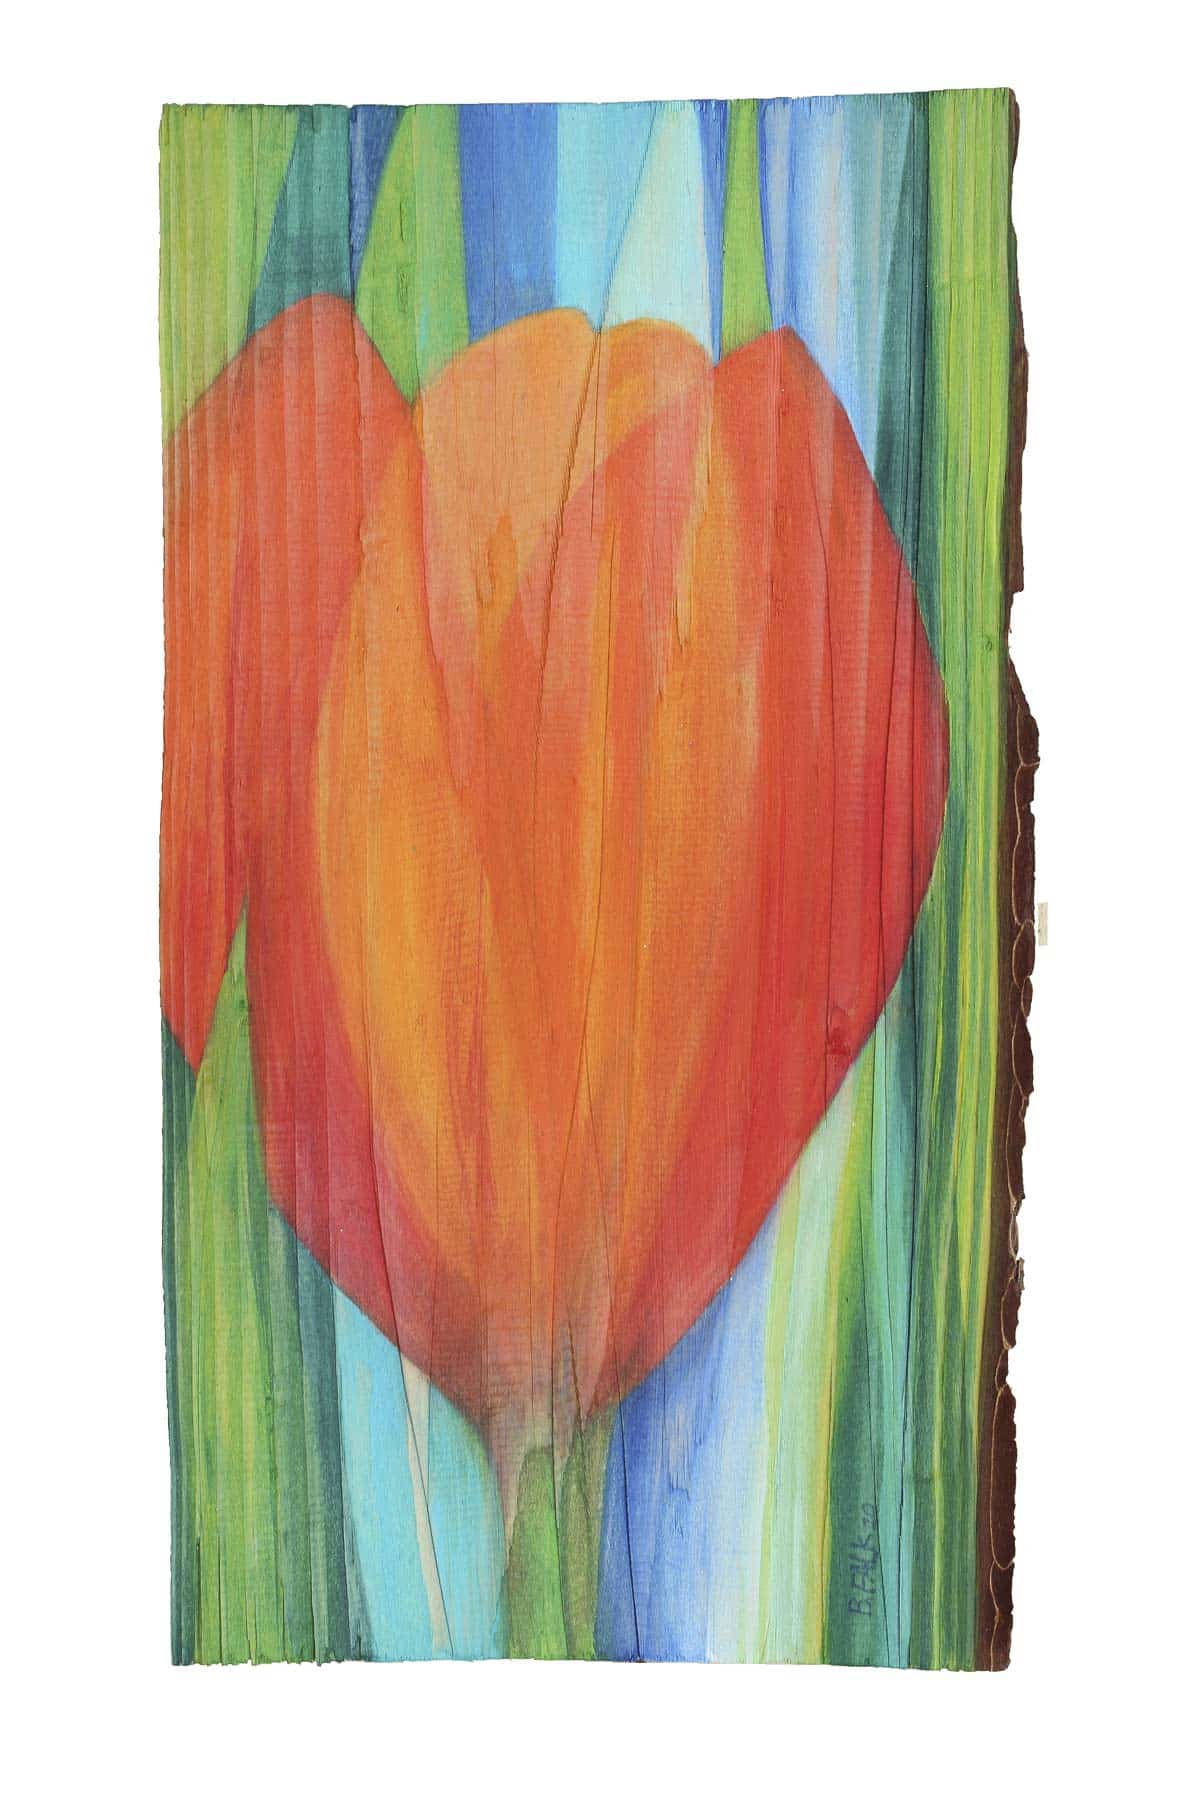 "Tulpe"	Aquarell auf Holz	19x35